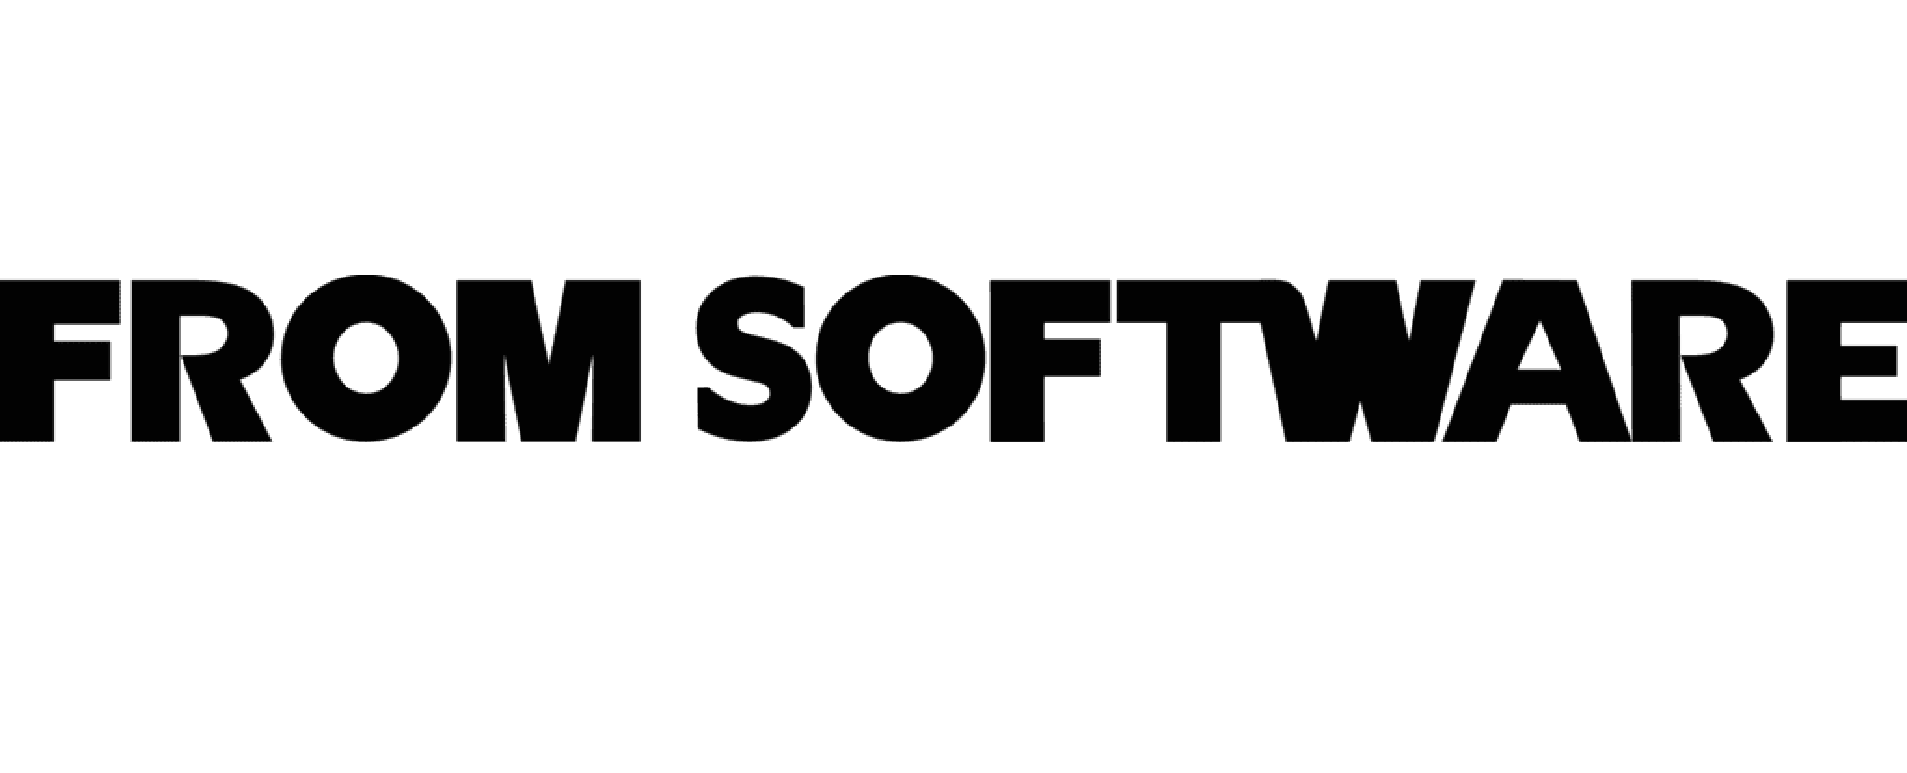 Do logotipo do software abril